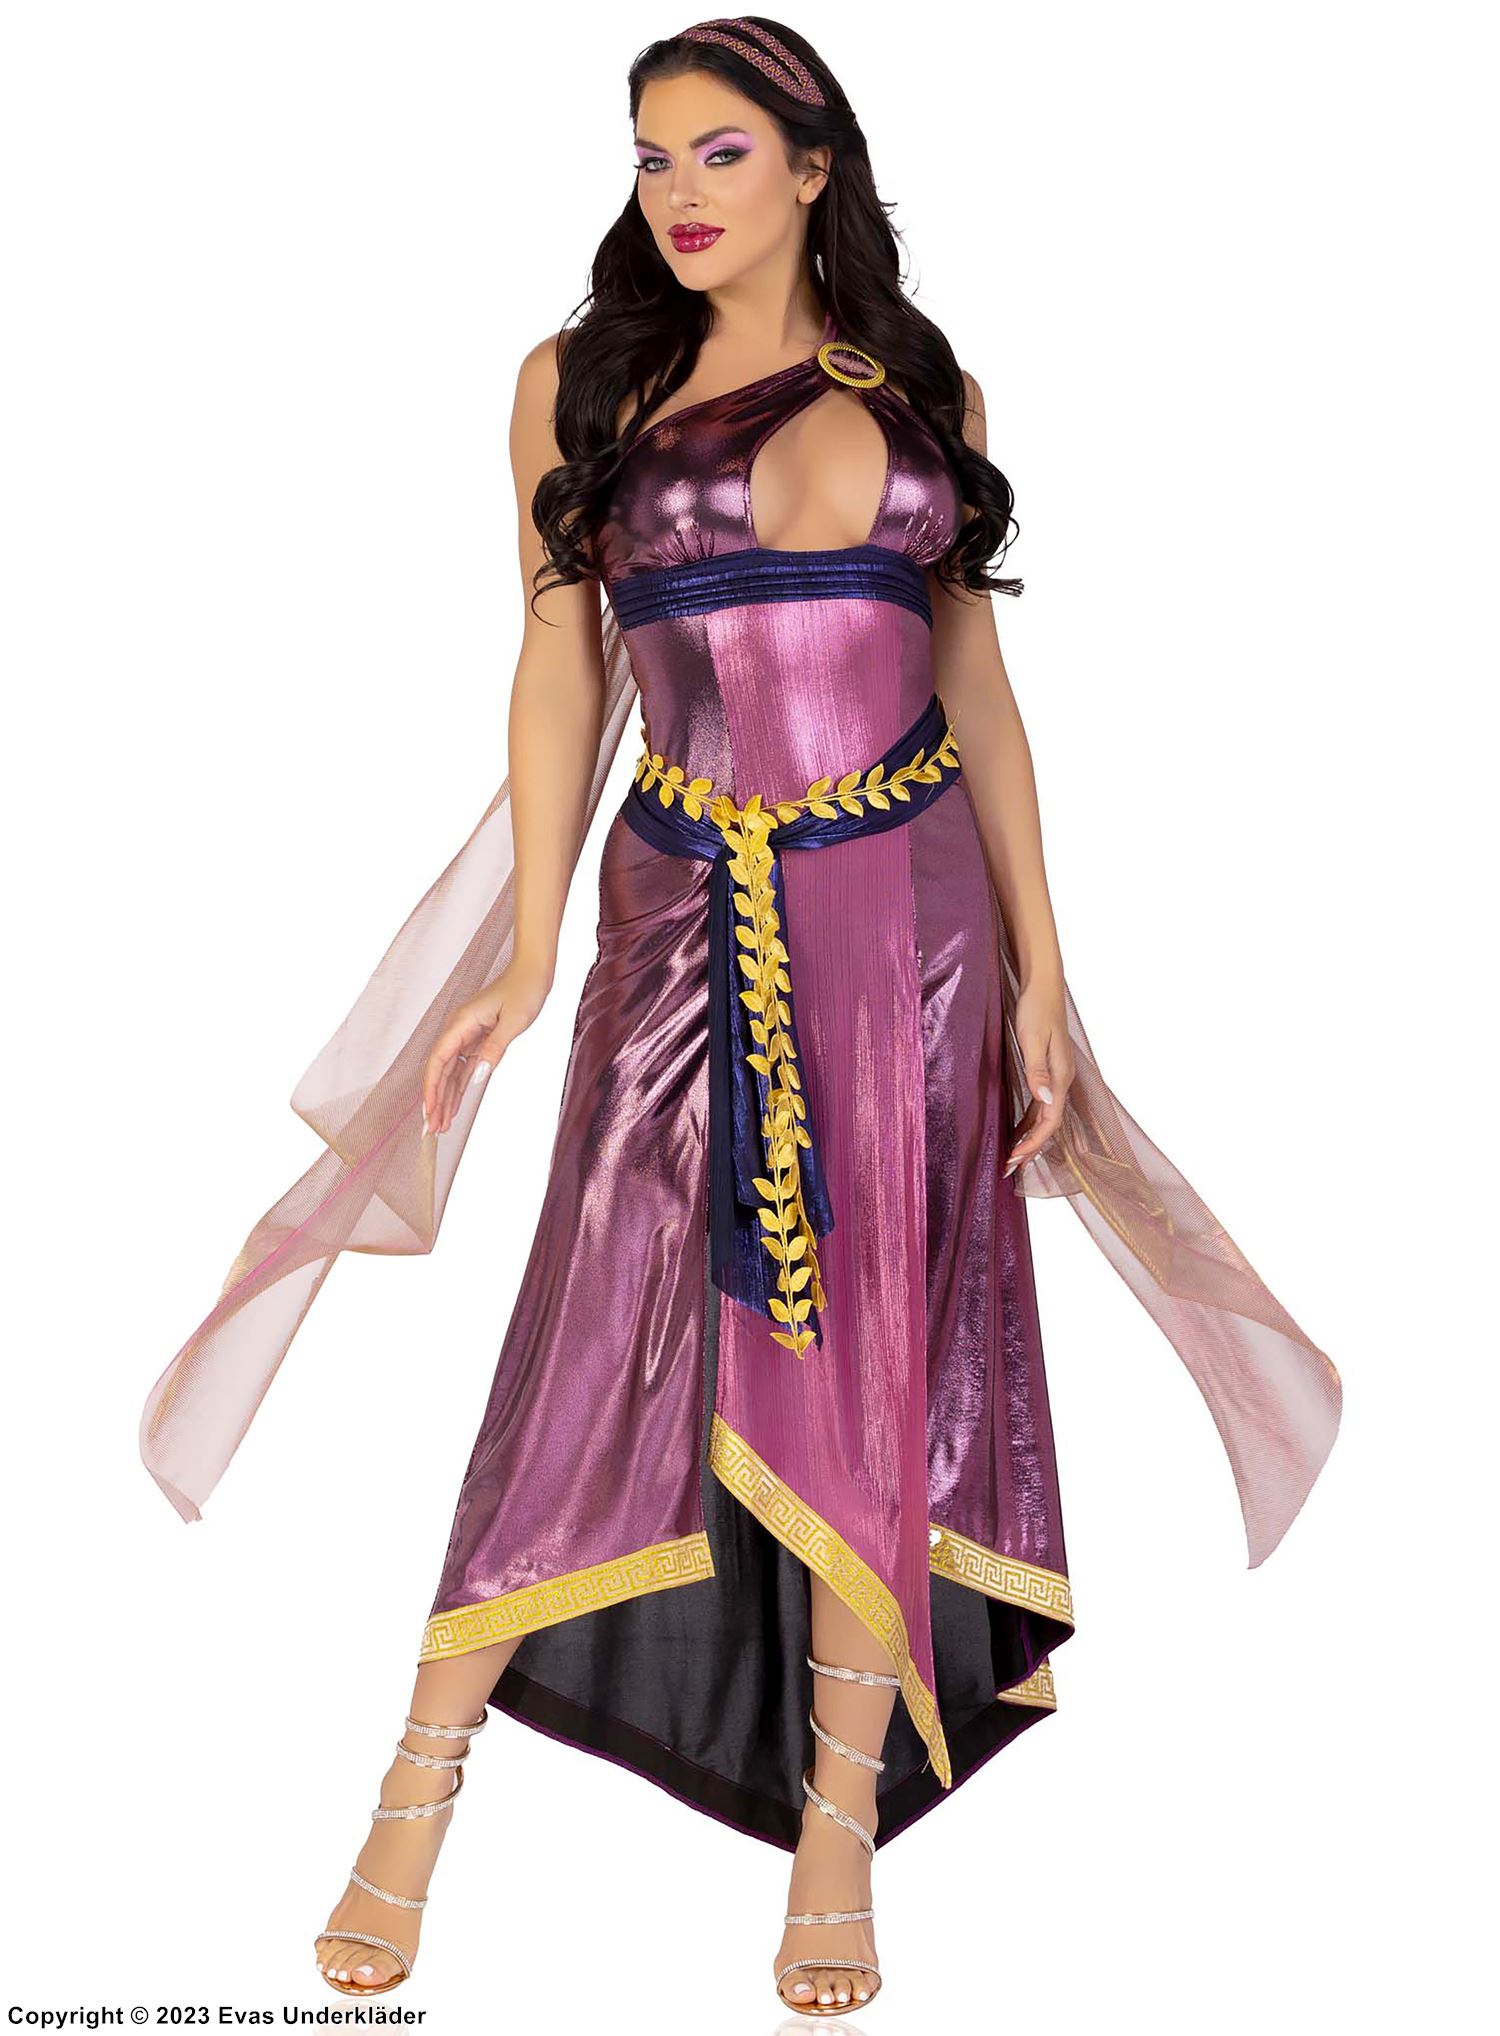 Goddess, costume dress, iridescent fabric, keyhole, one-shoulder